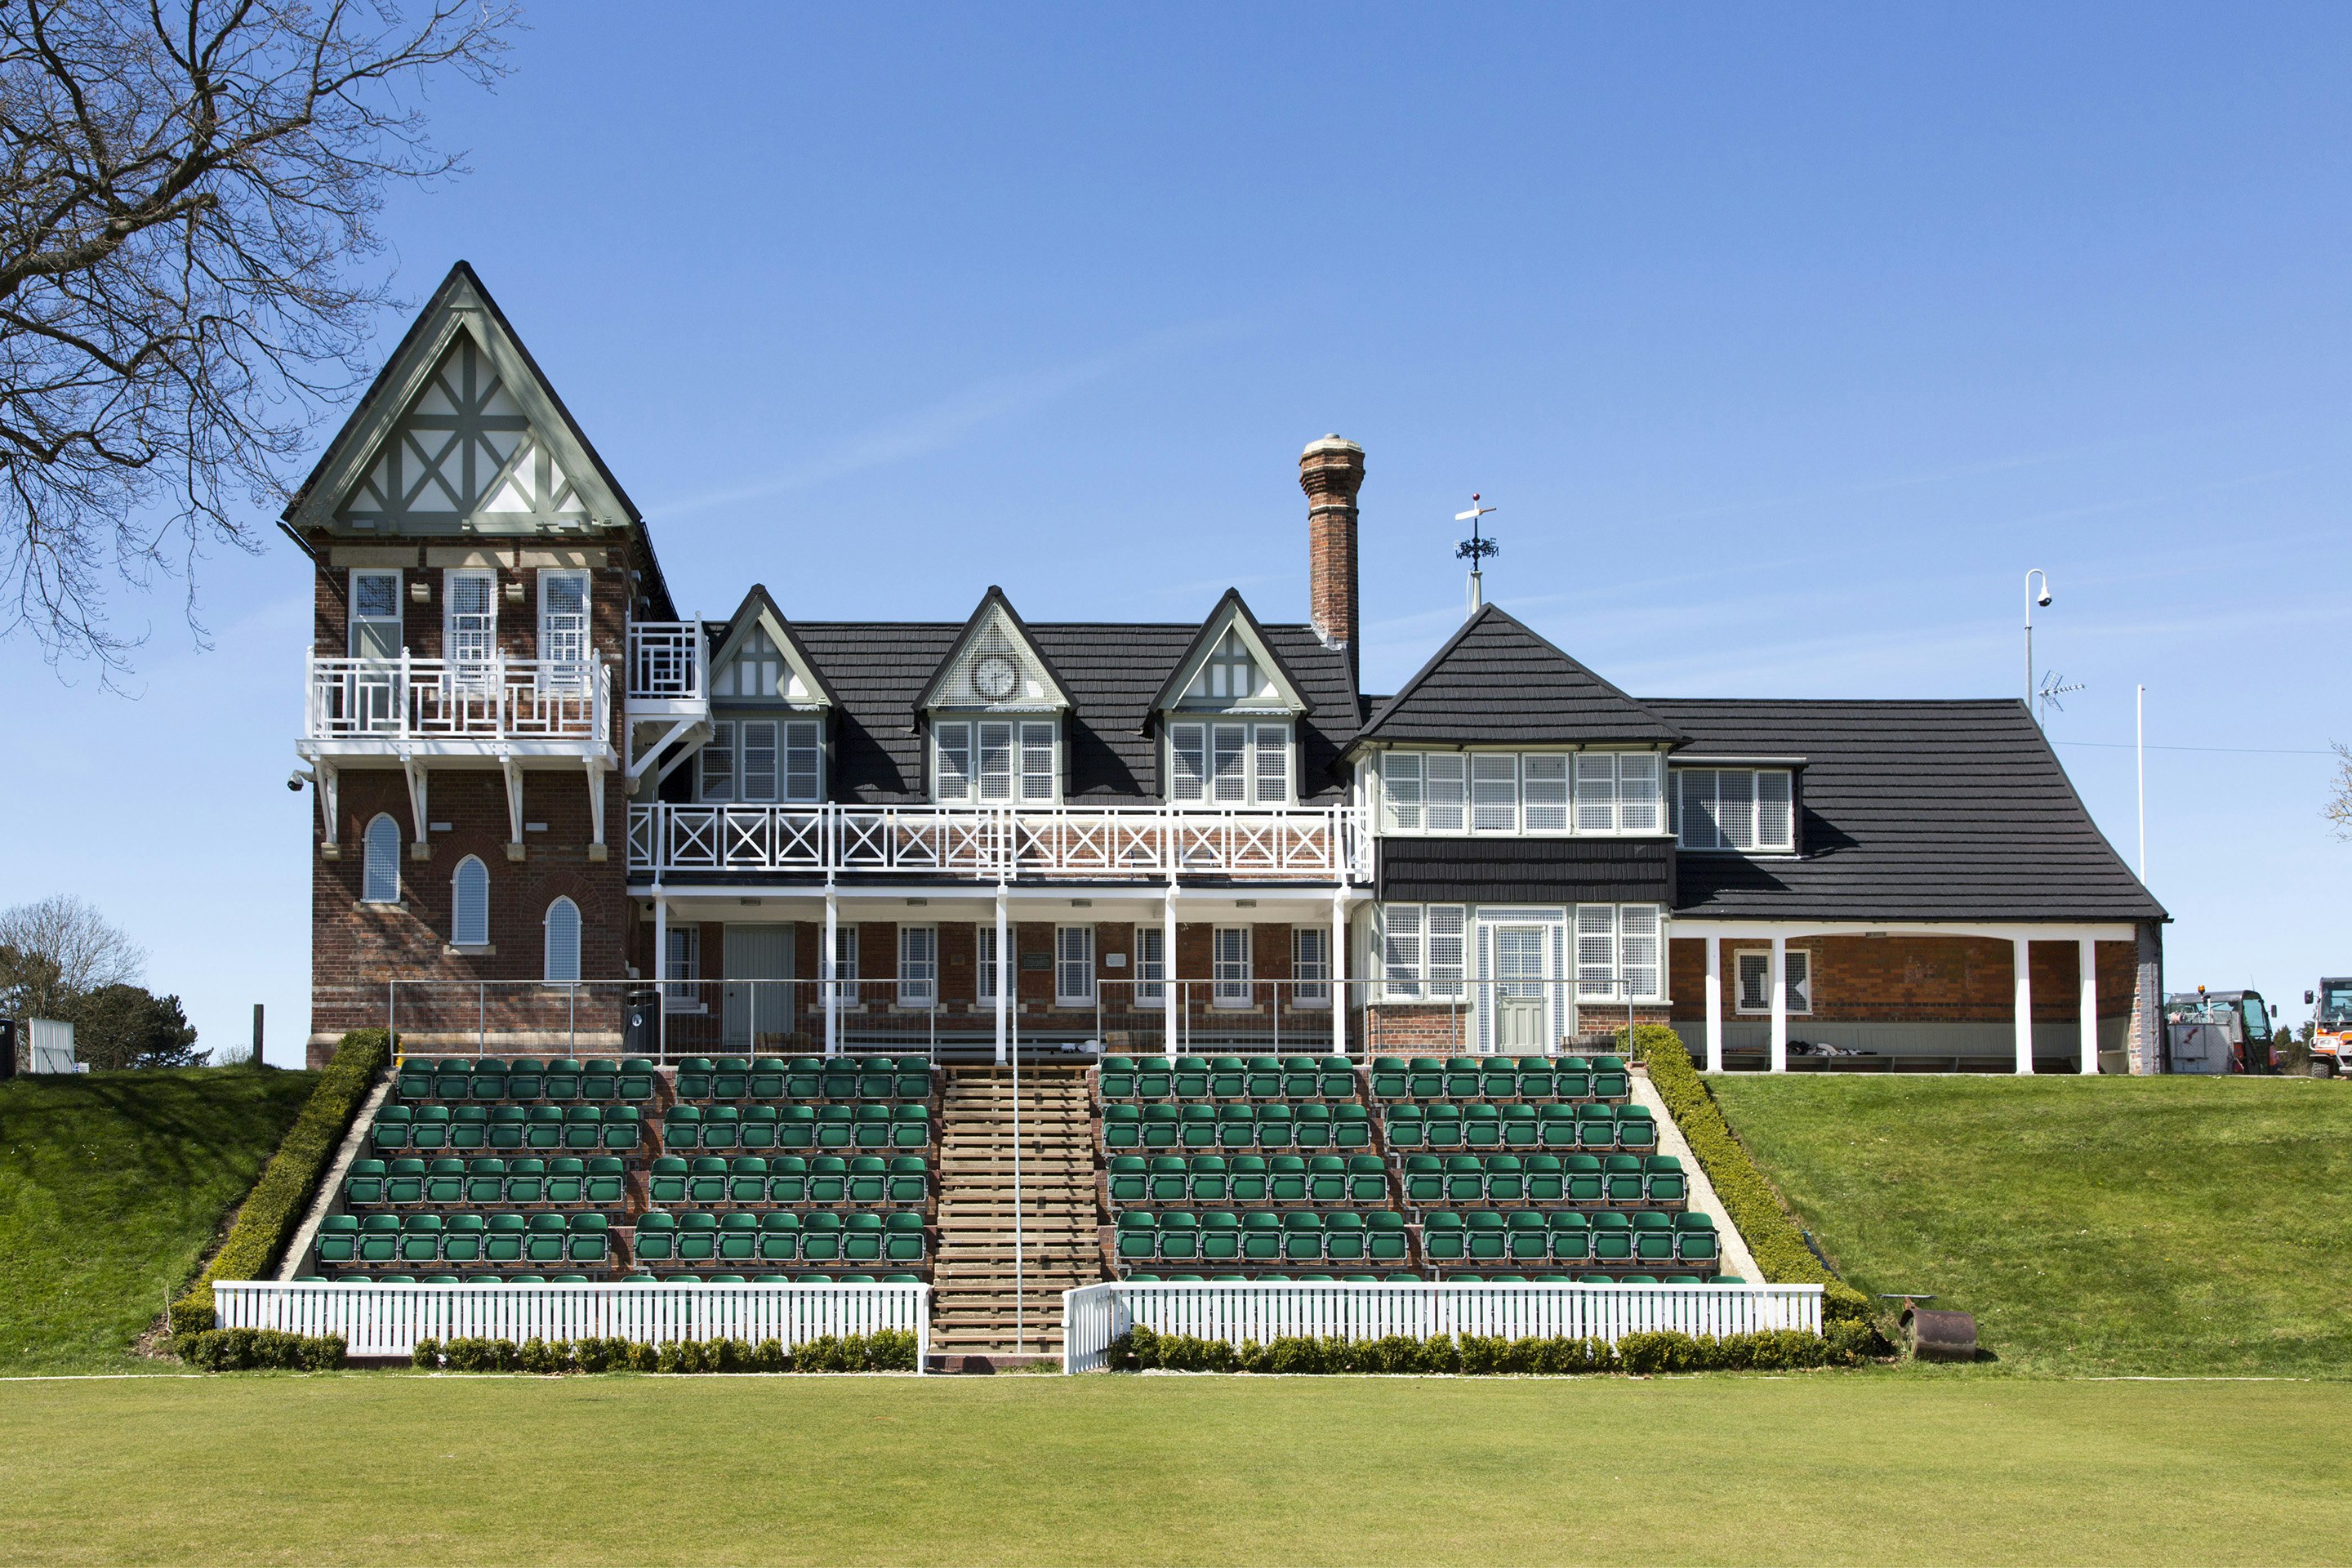 Marlborough College - Cricket Pavilion image 5